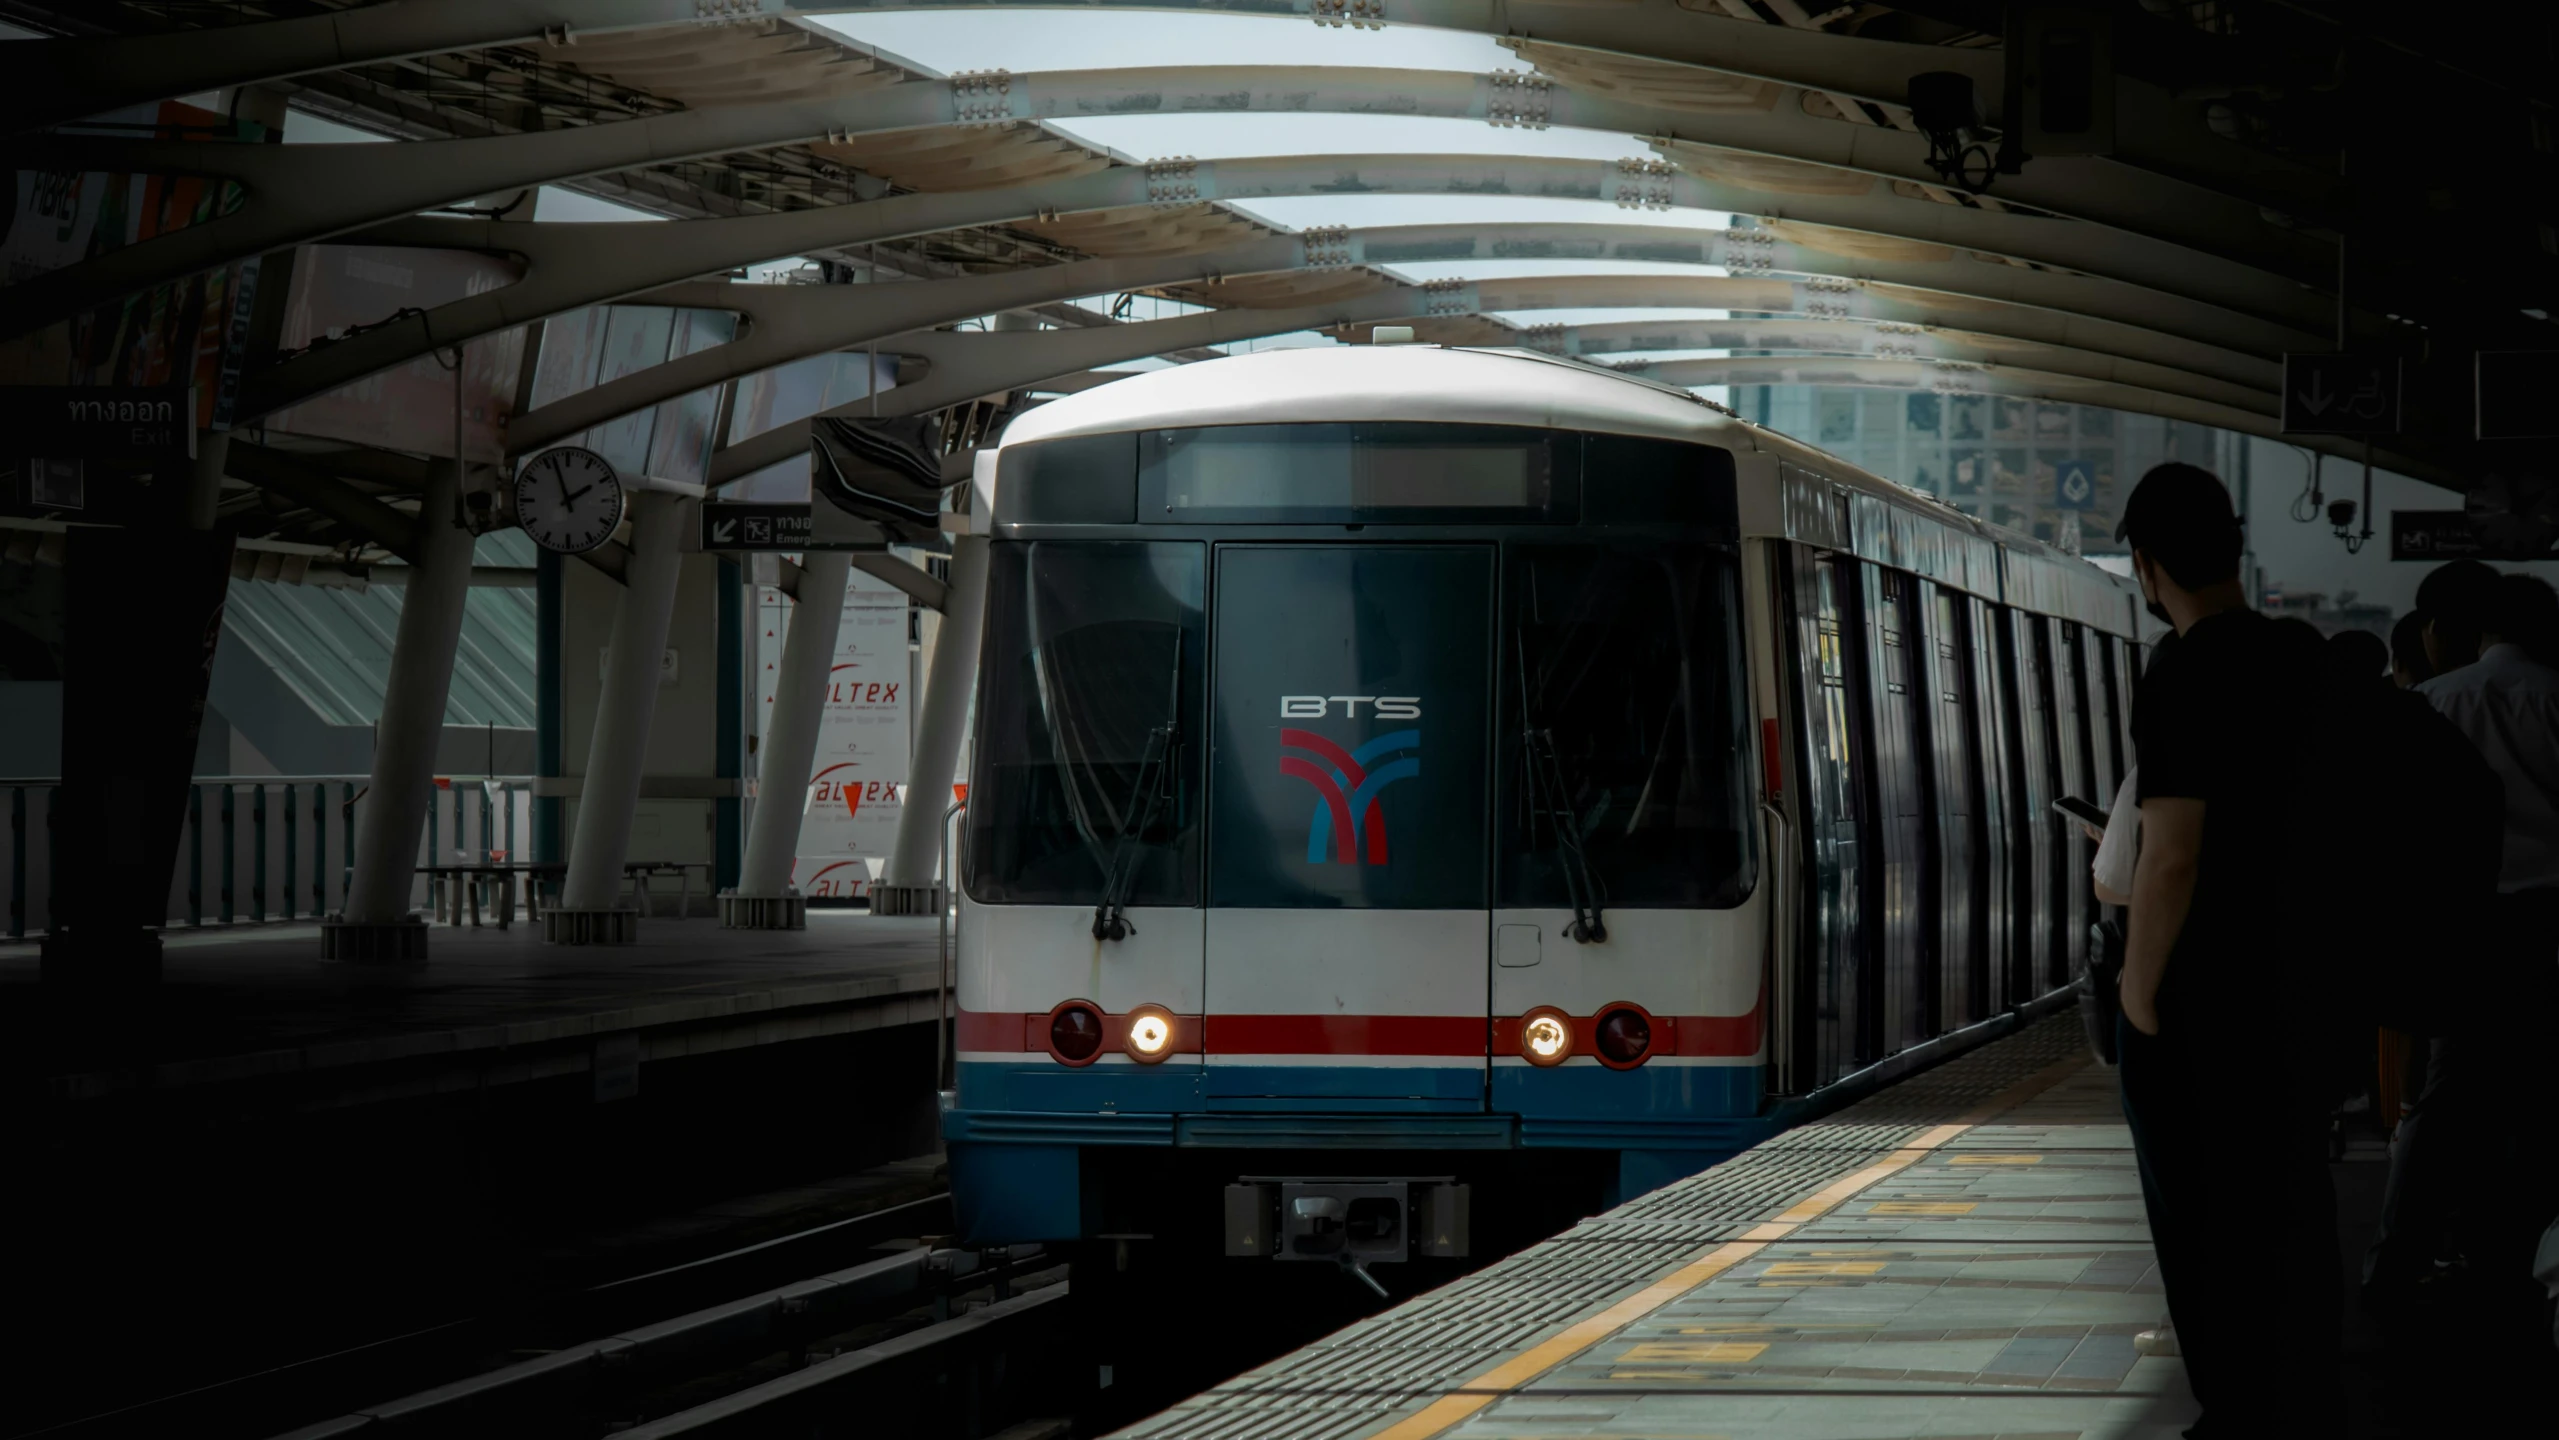 a train traveling down tracks next to a station platform